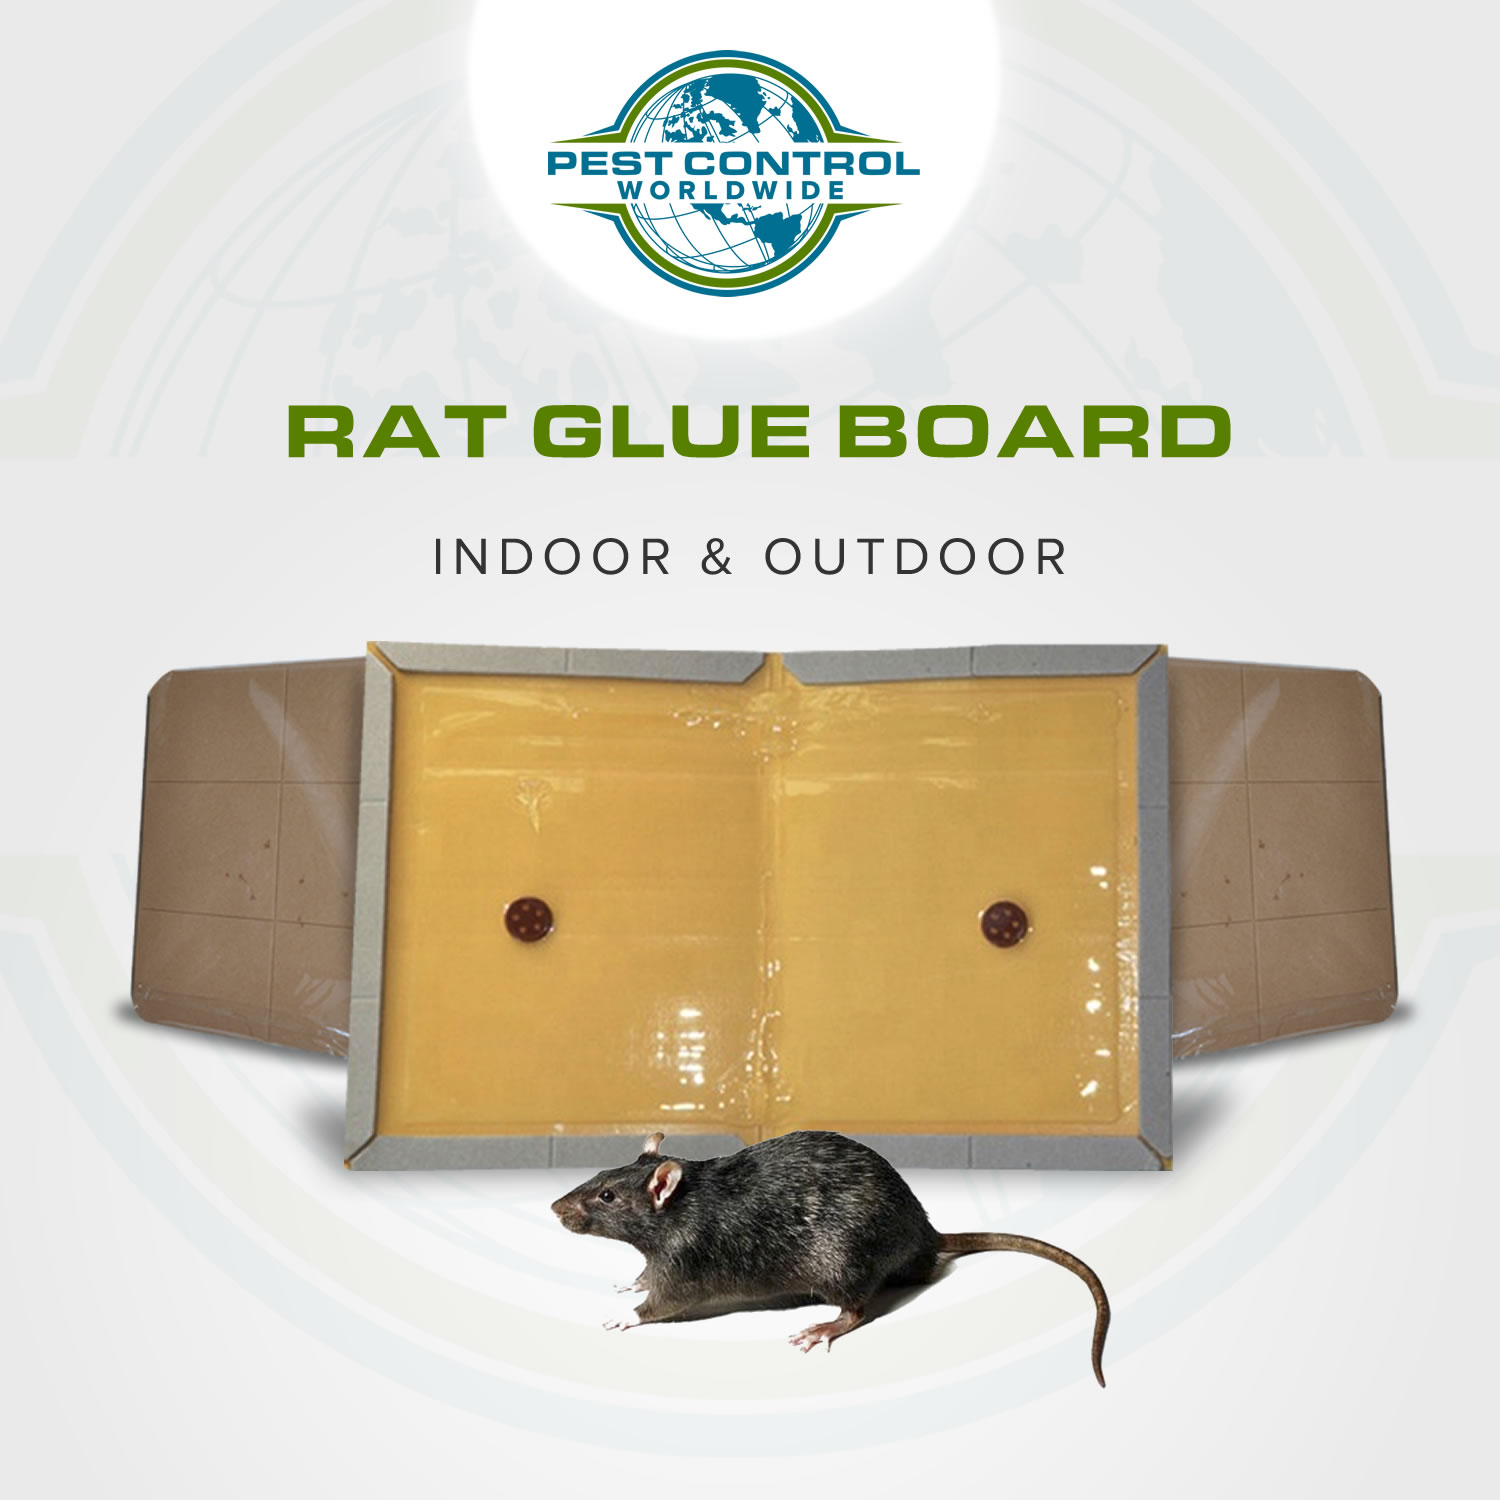 https://pestcontrolworldwide.com/wp-content/webpc-passthru.php?src=https://pestcontrolworldwide.com/wp-content/uploads/2021/05/Rat-Glue-Board_1.jpg&nocache=1